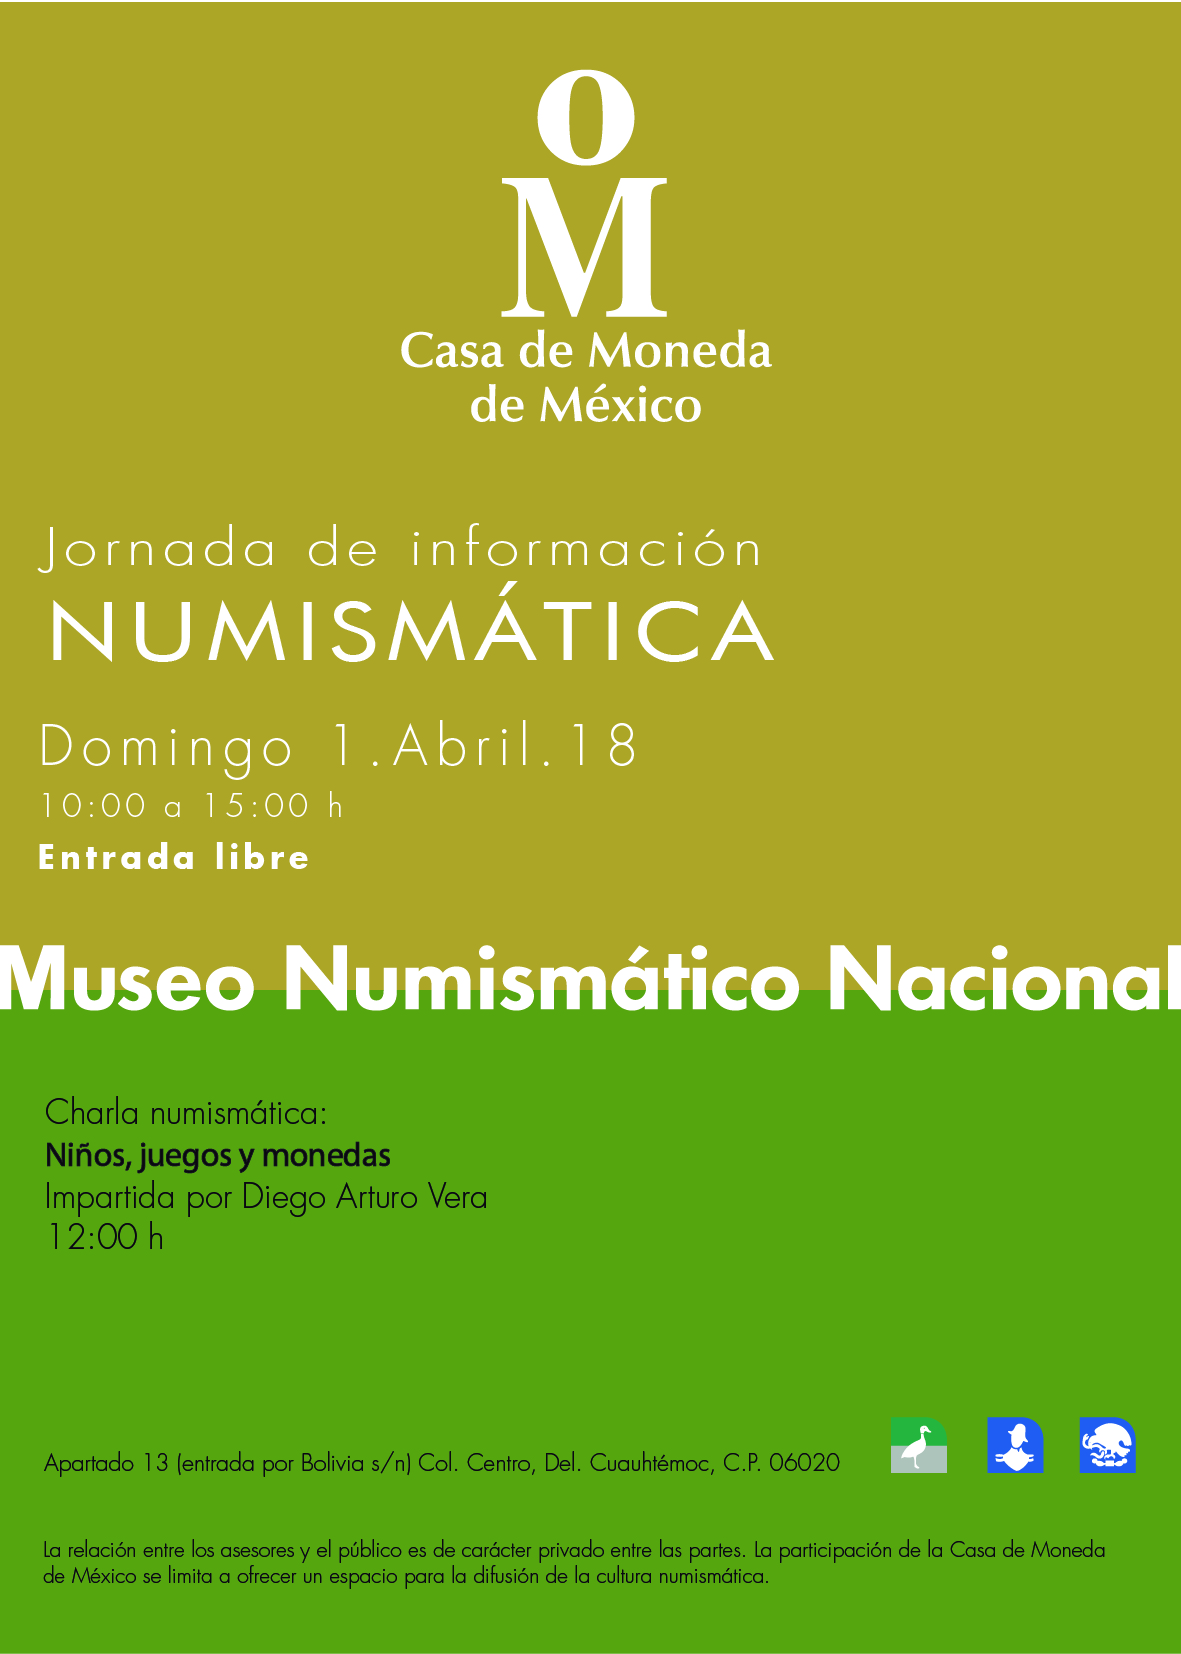 /cms/uploads/image/file/385297/Jornada_de_informaci_n_numism_tica_de_abril.jpg